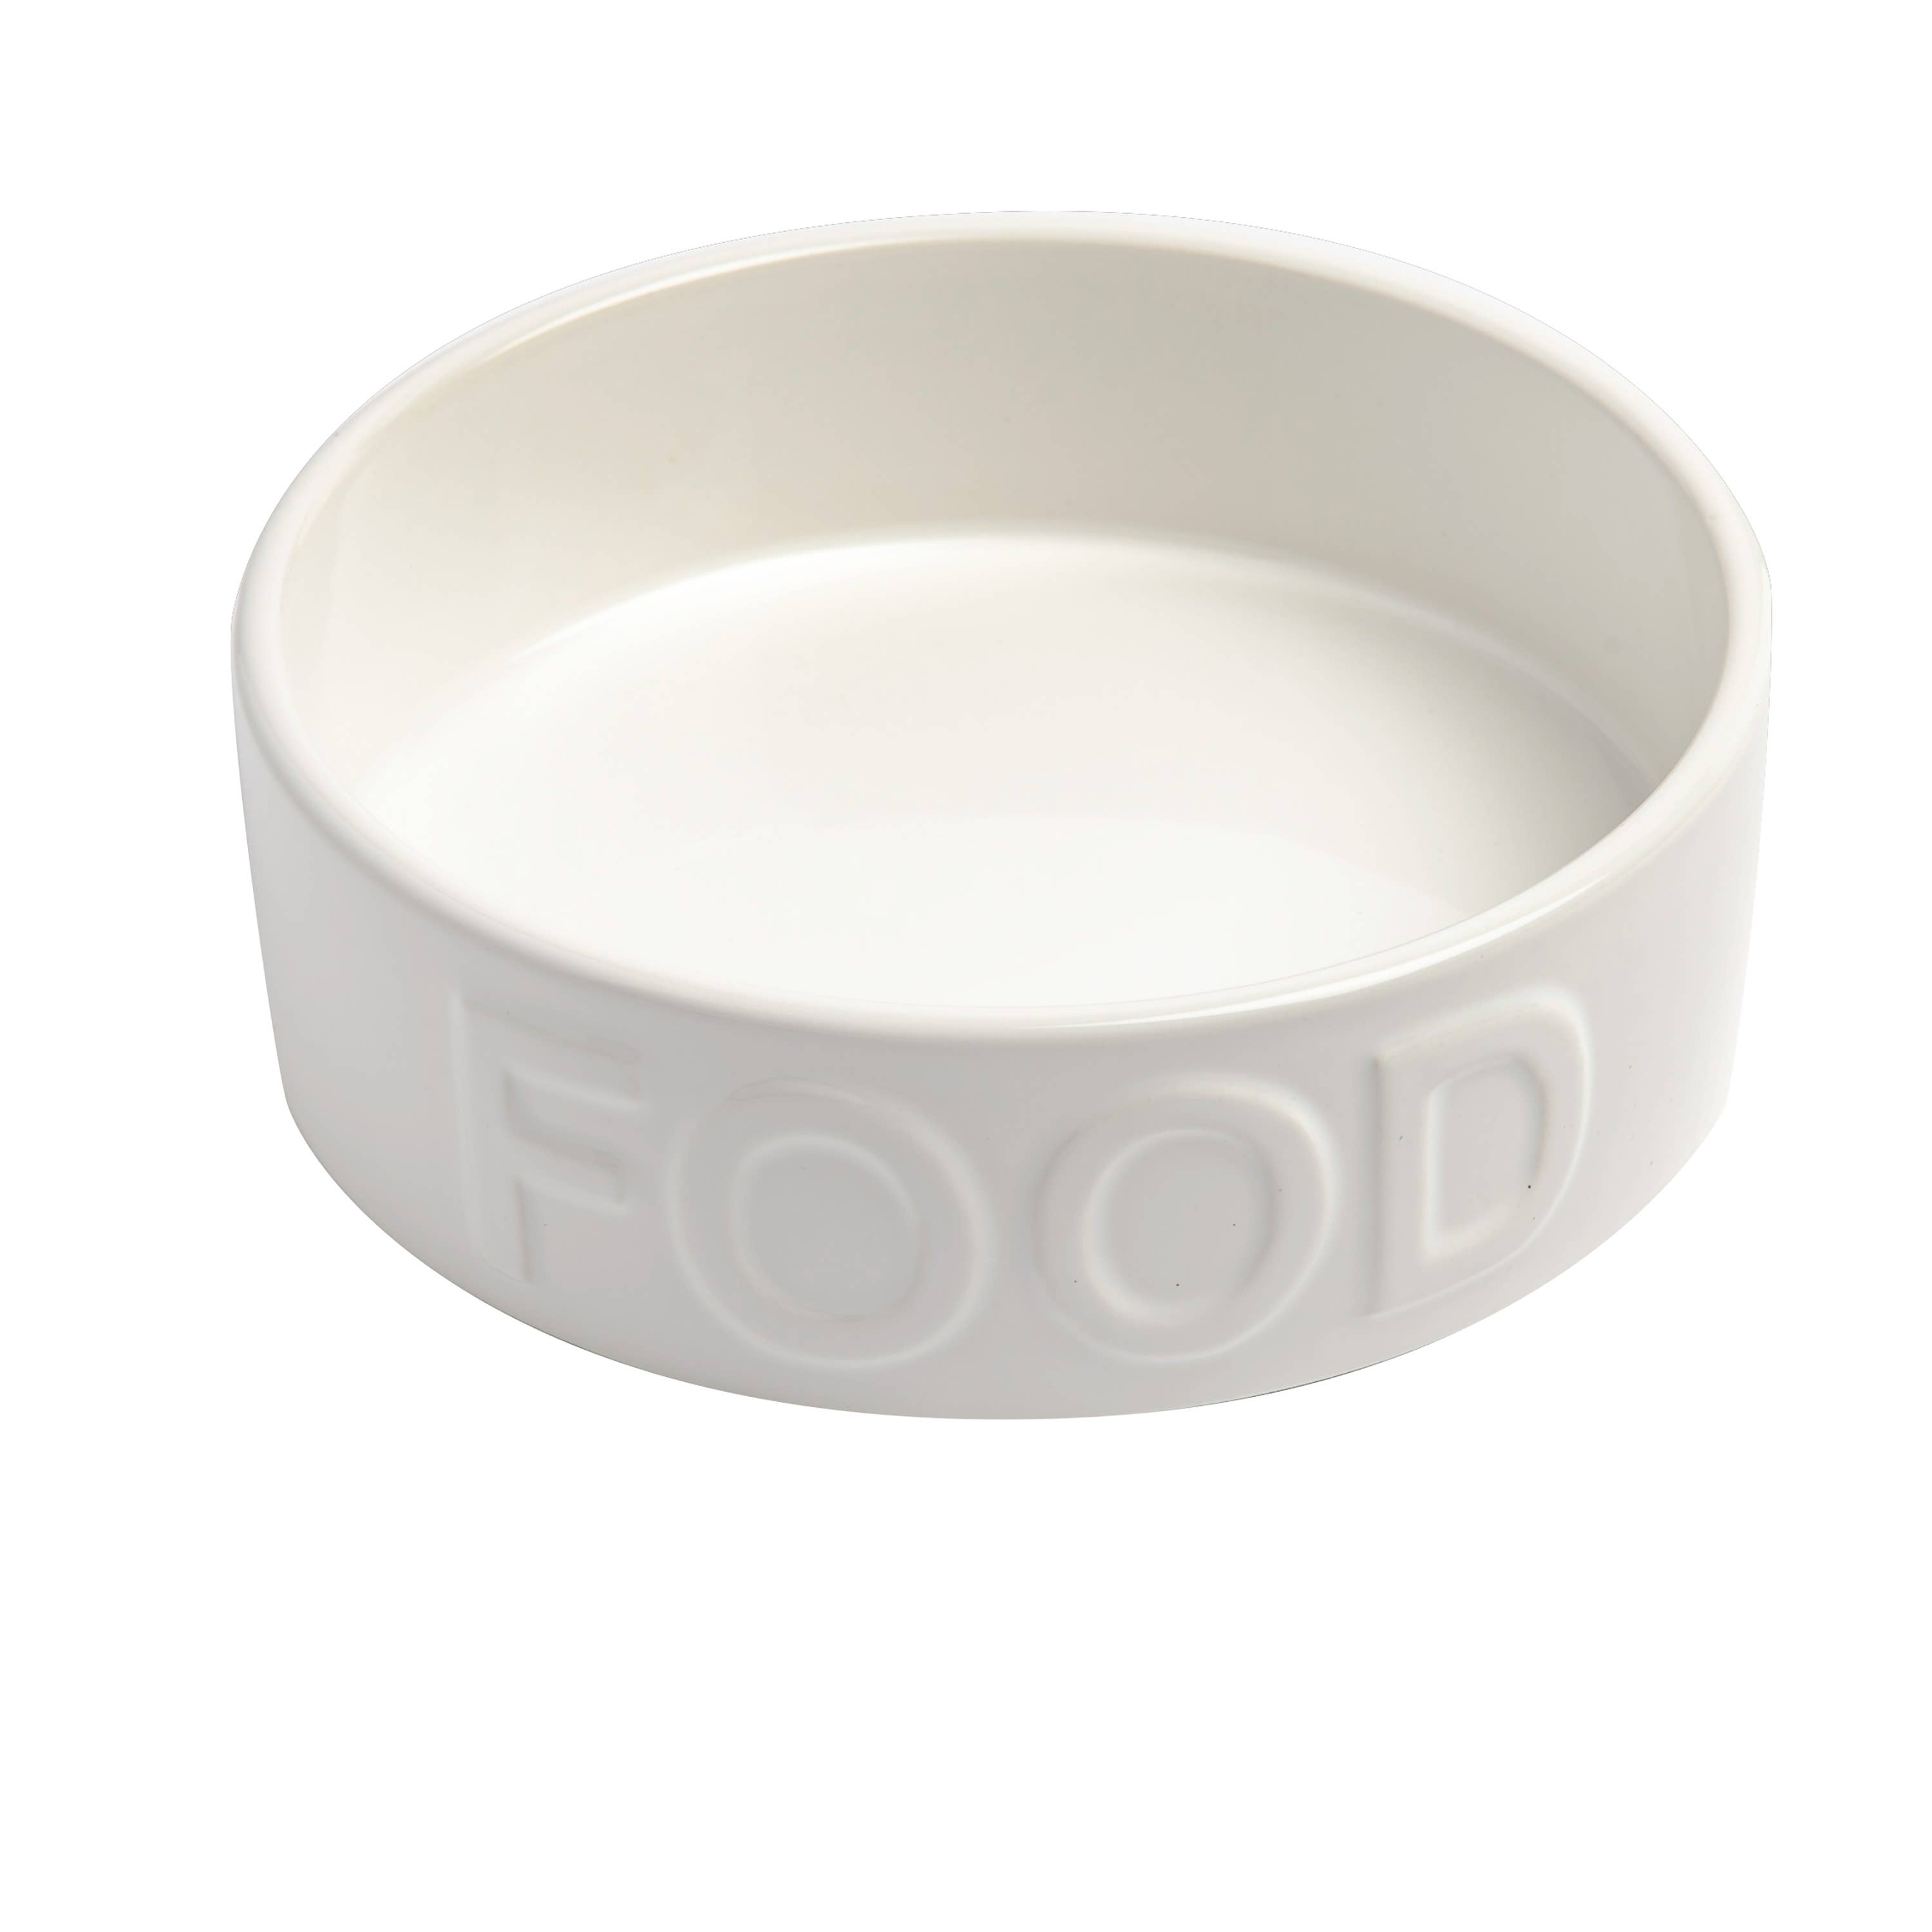 plain white dog bowl